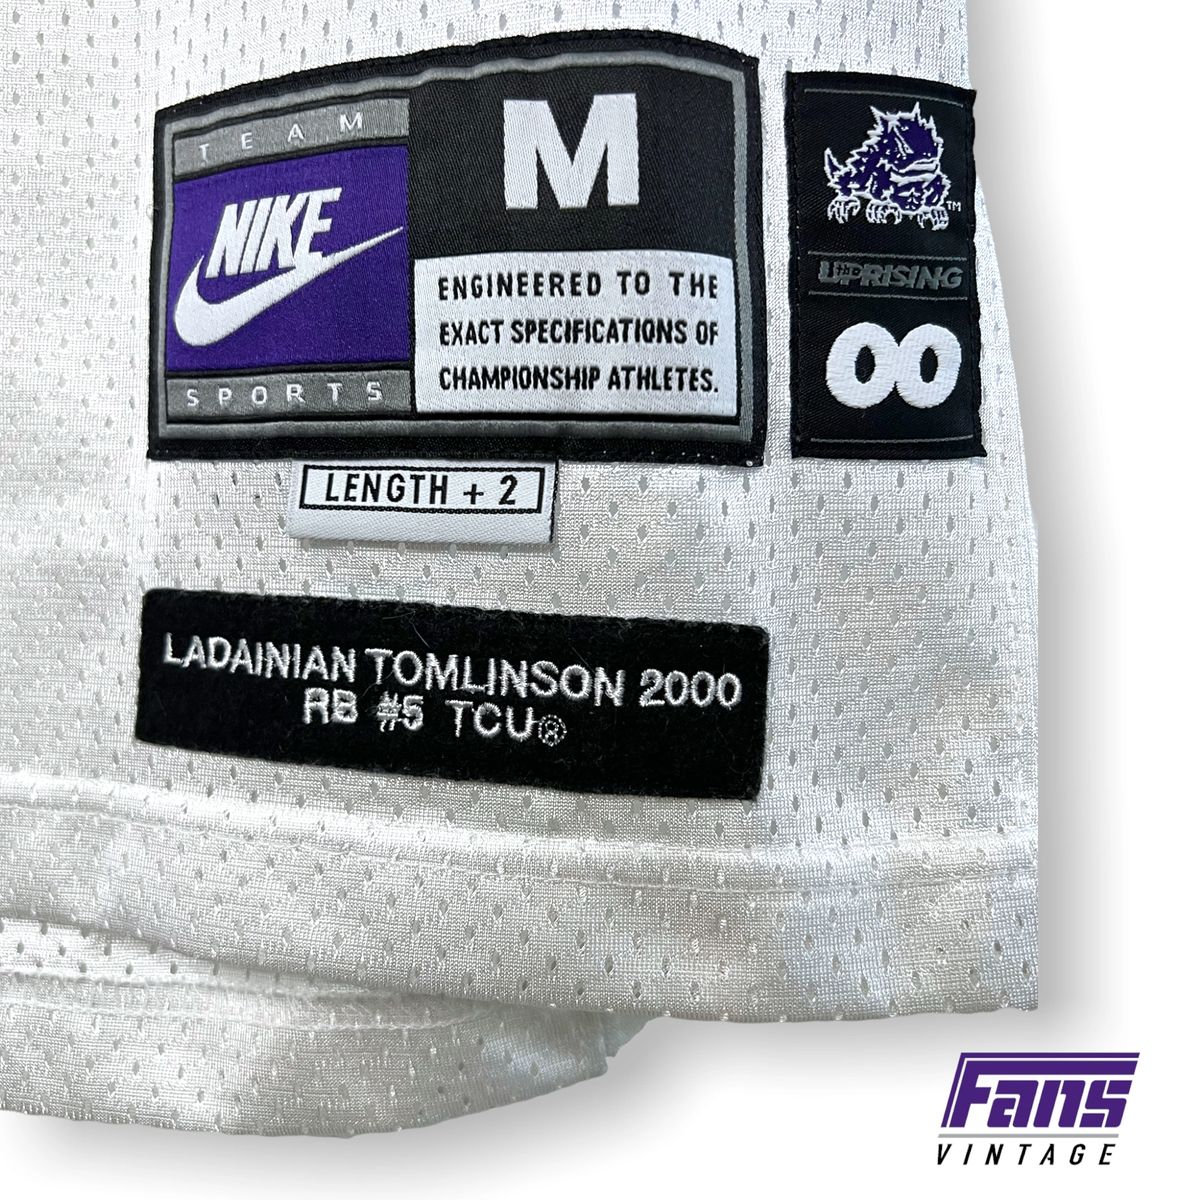 *Grail LaDainian Tomlinson Jersey!* Vintage Nike 2000 TCU Football LT Jersey